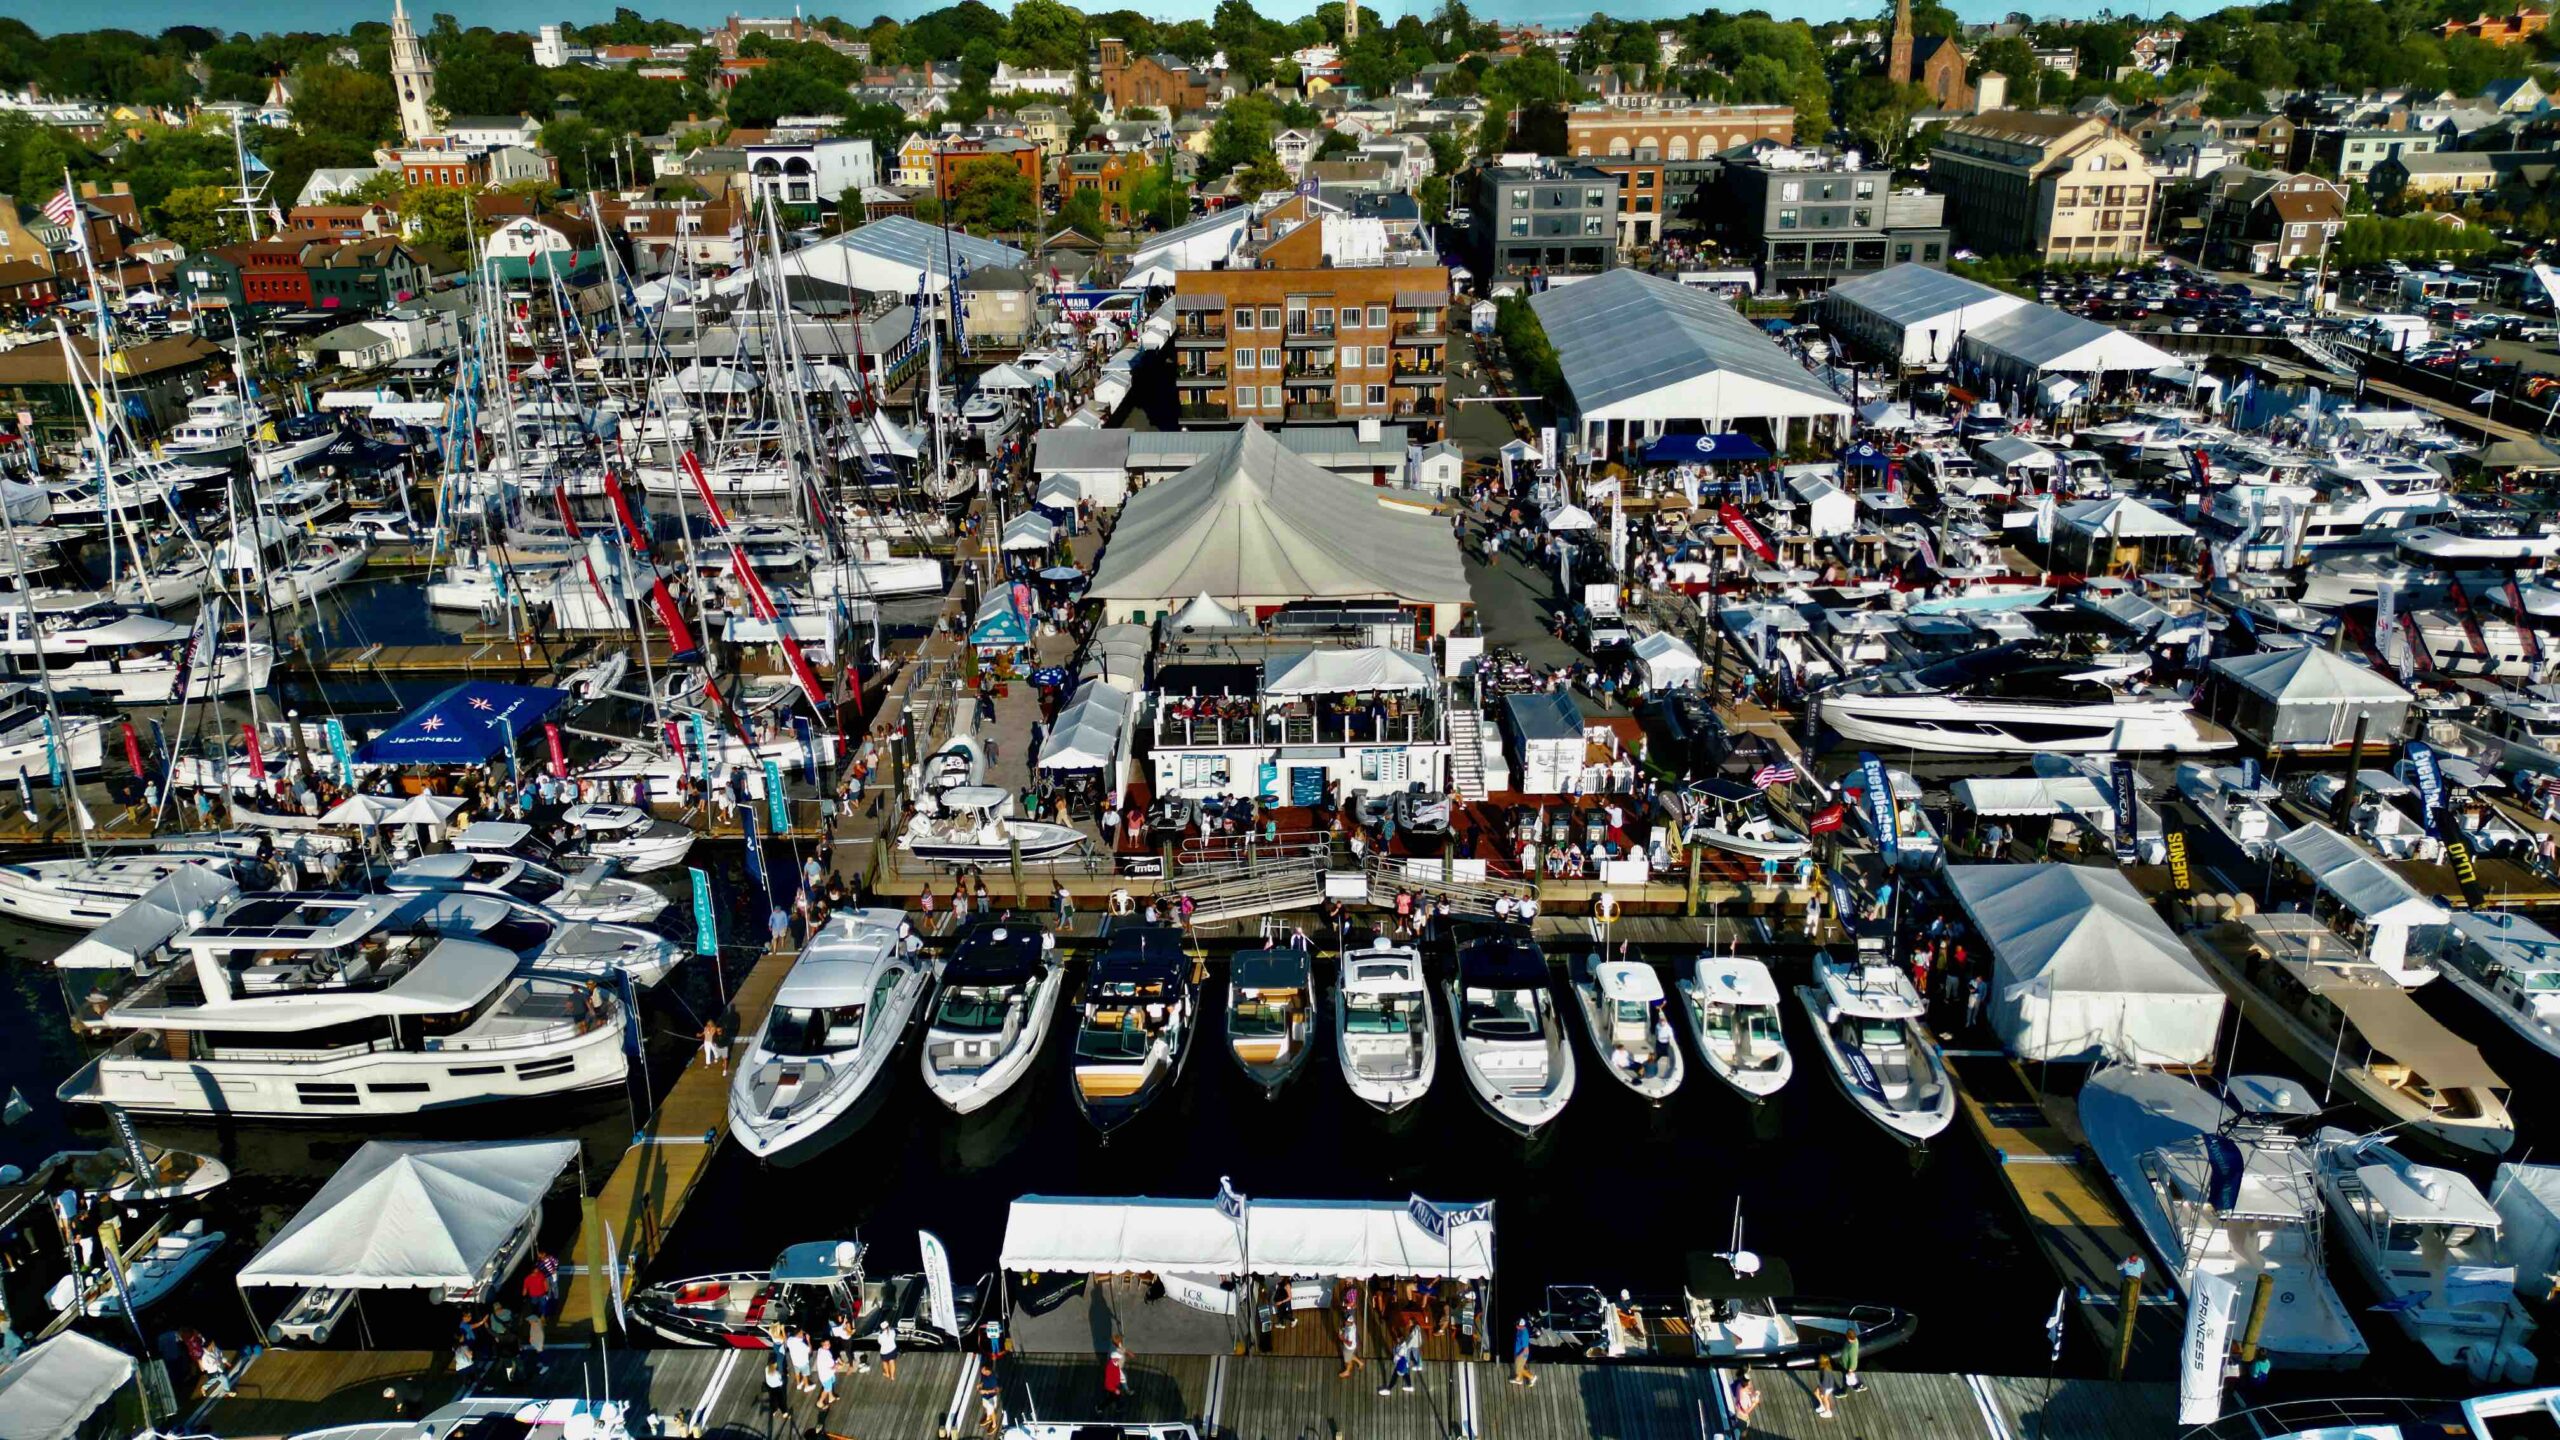 Newport Boat Show dates announced